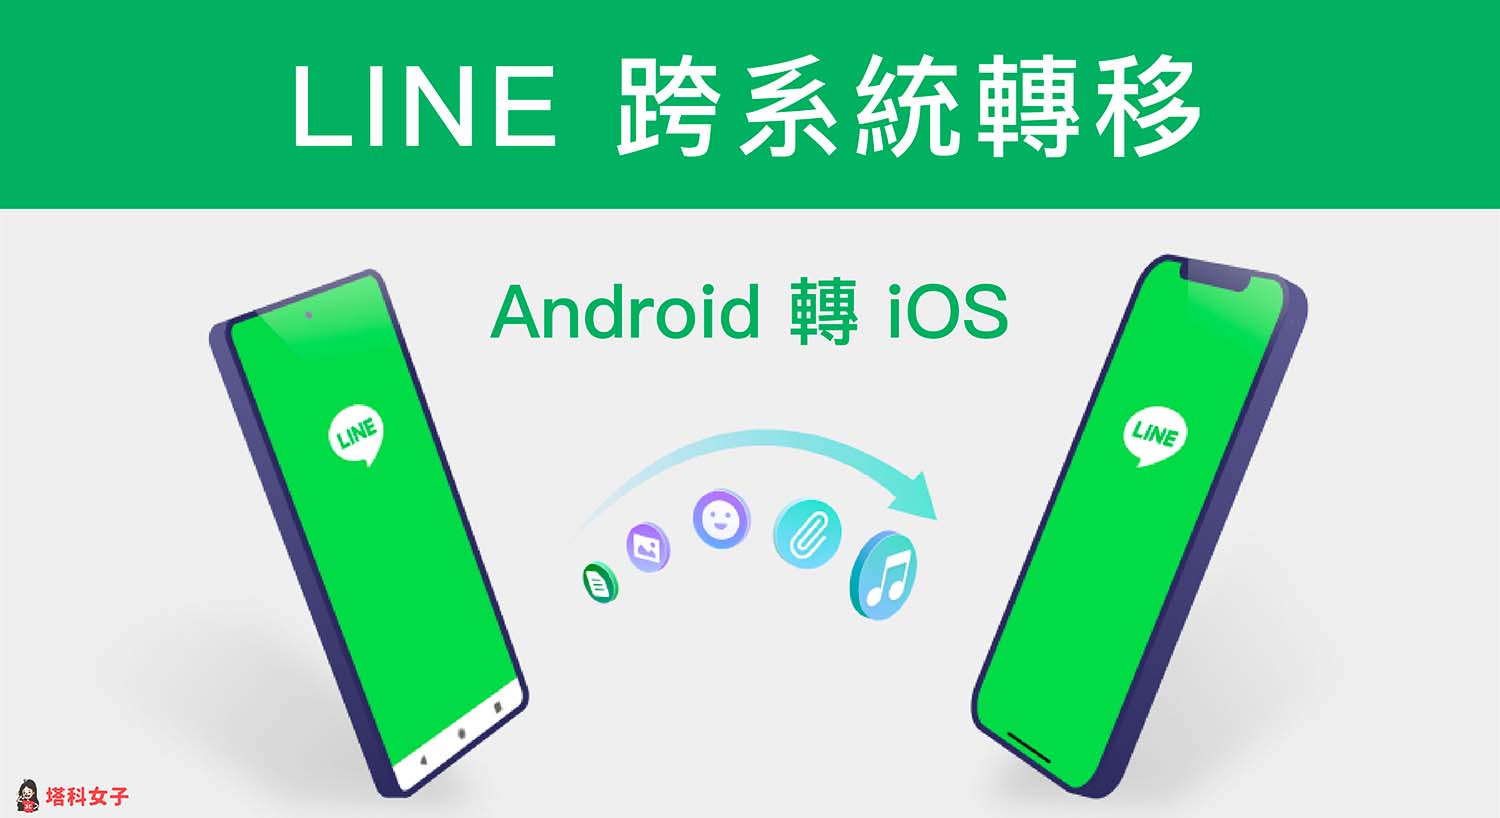 LINE 跨系統轉移教學，簡單 5 步驟實現 Android轉iOS LINE